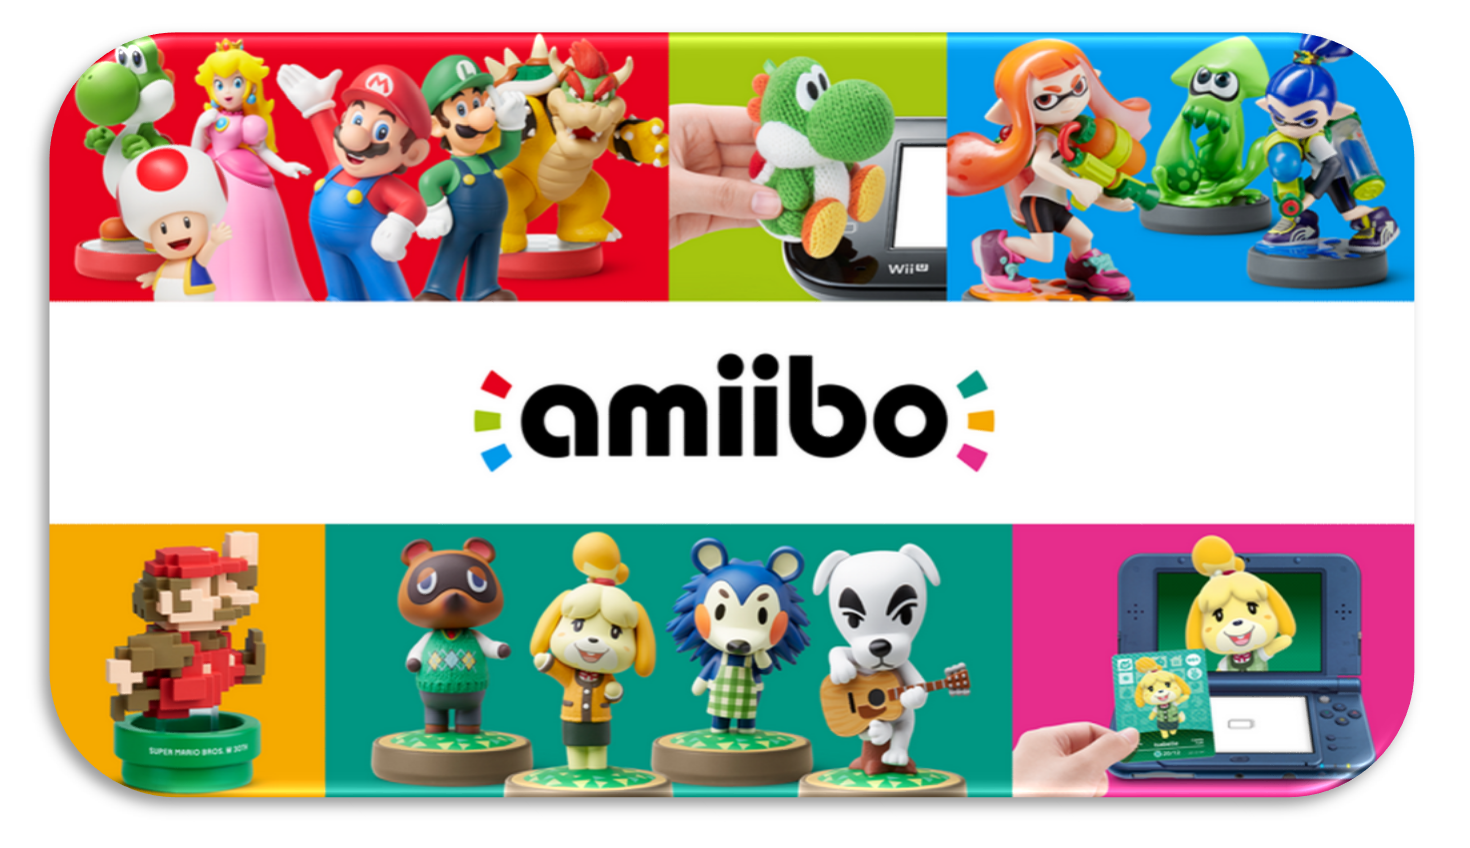 Link (Super Smash Bros. series) - Nintendo WiiU Amiibo (Japanese Impor